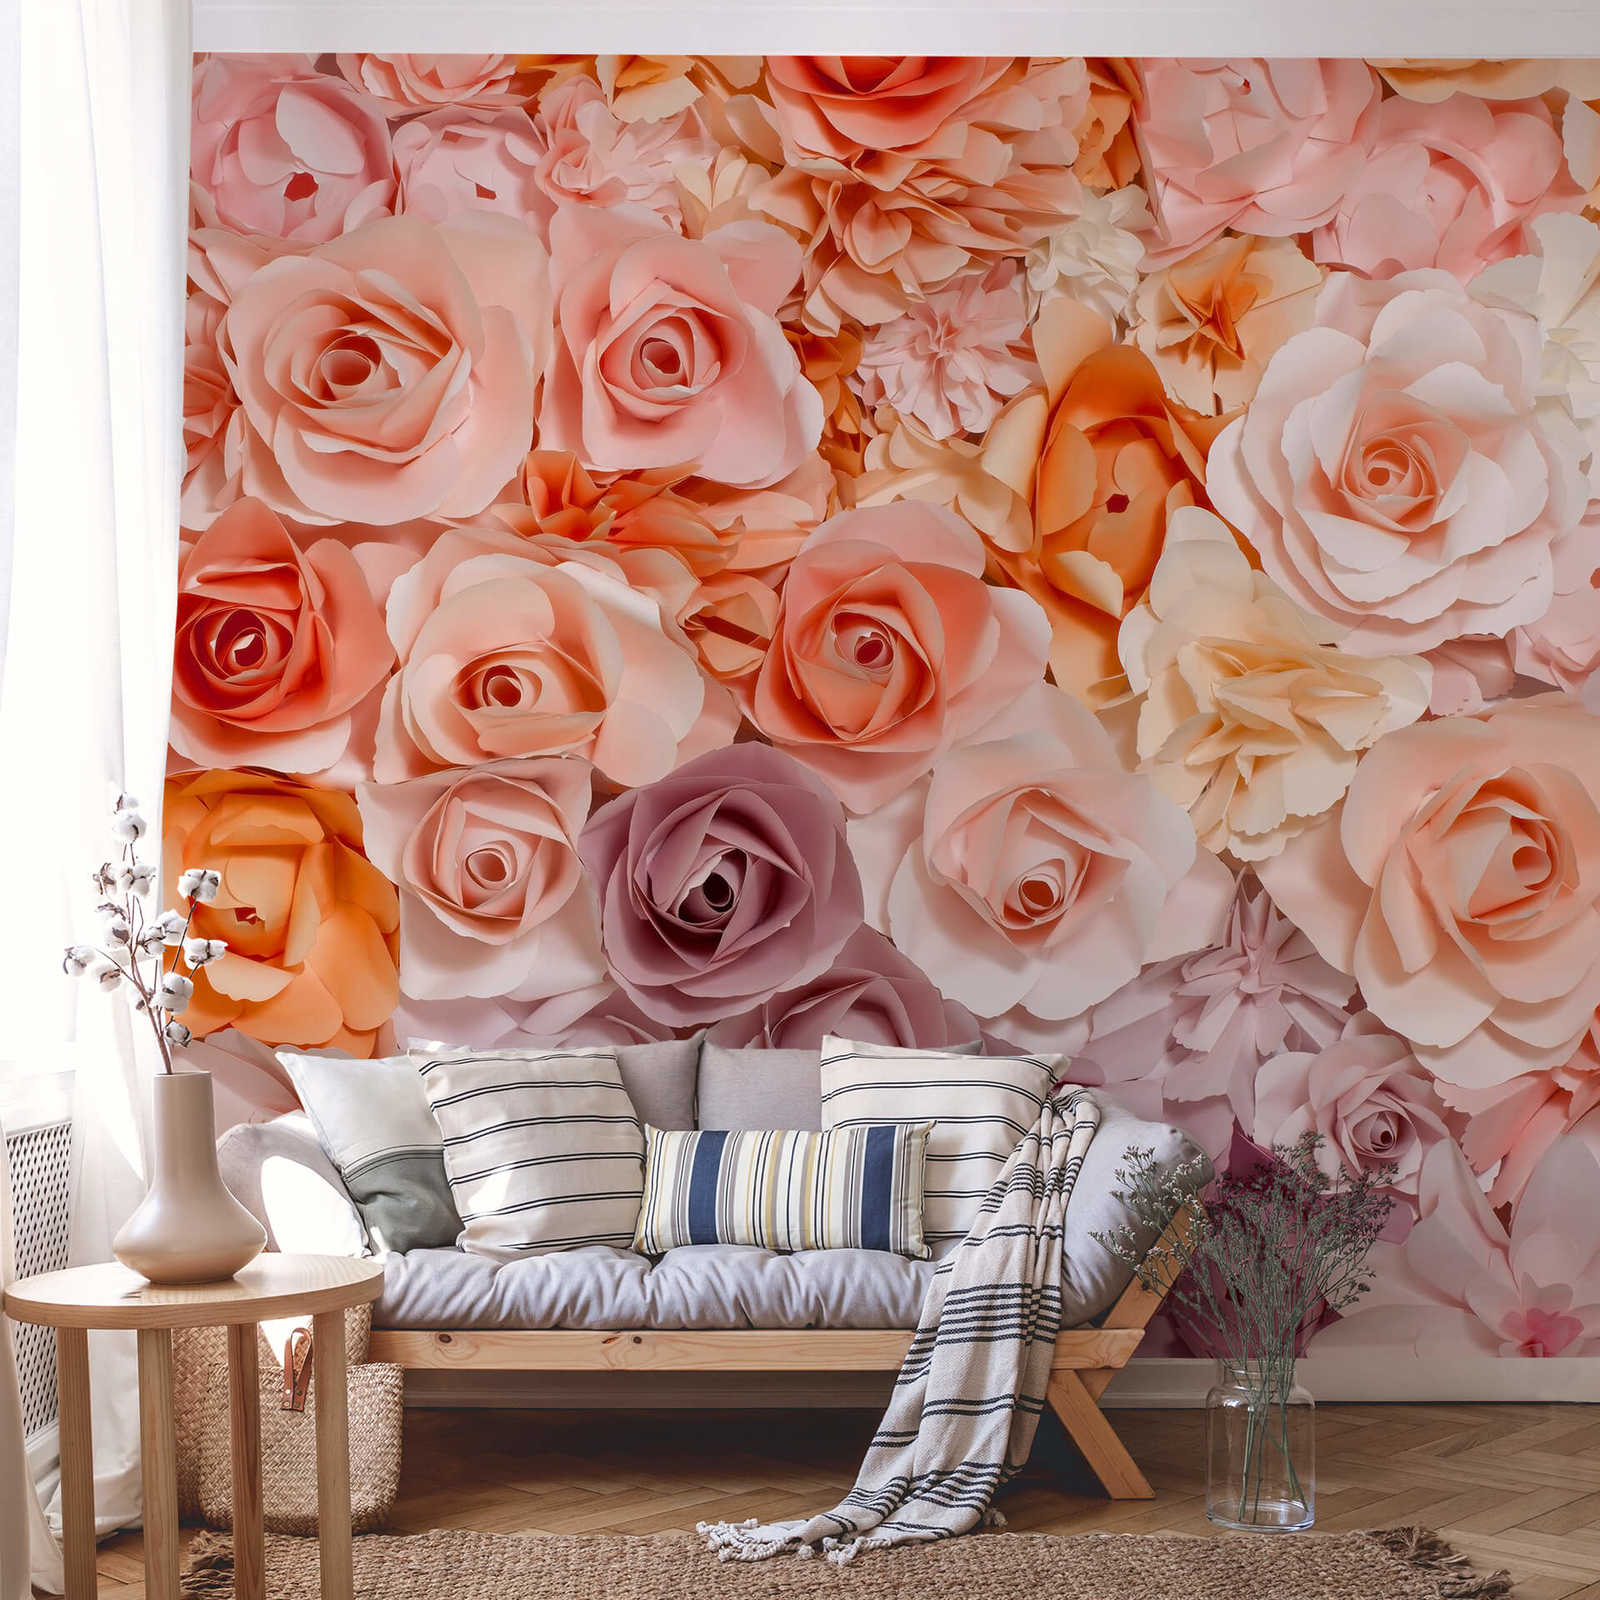             3D Fototapete mit Rosenblüten Muster – Rosa, Weiß
        